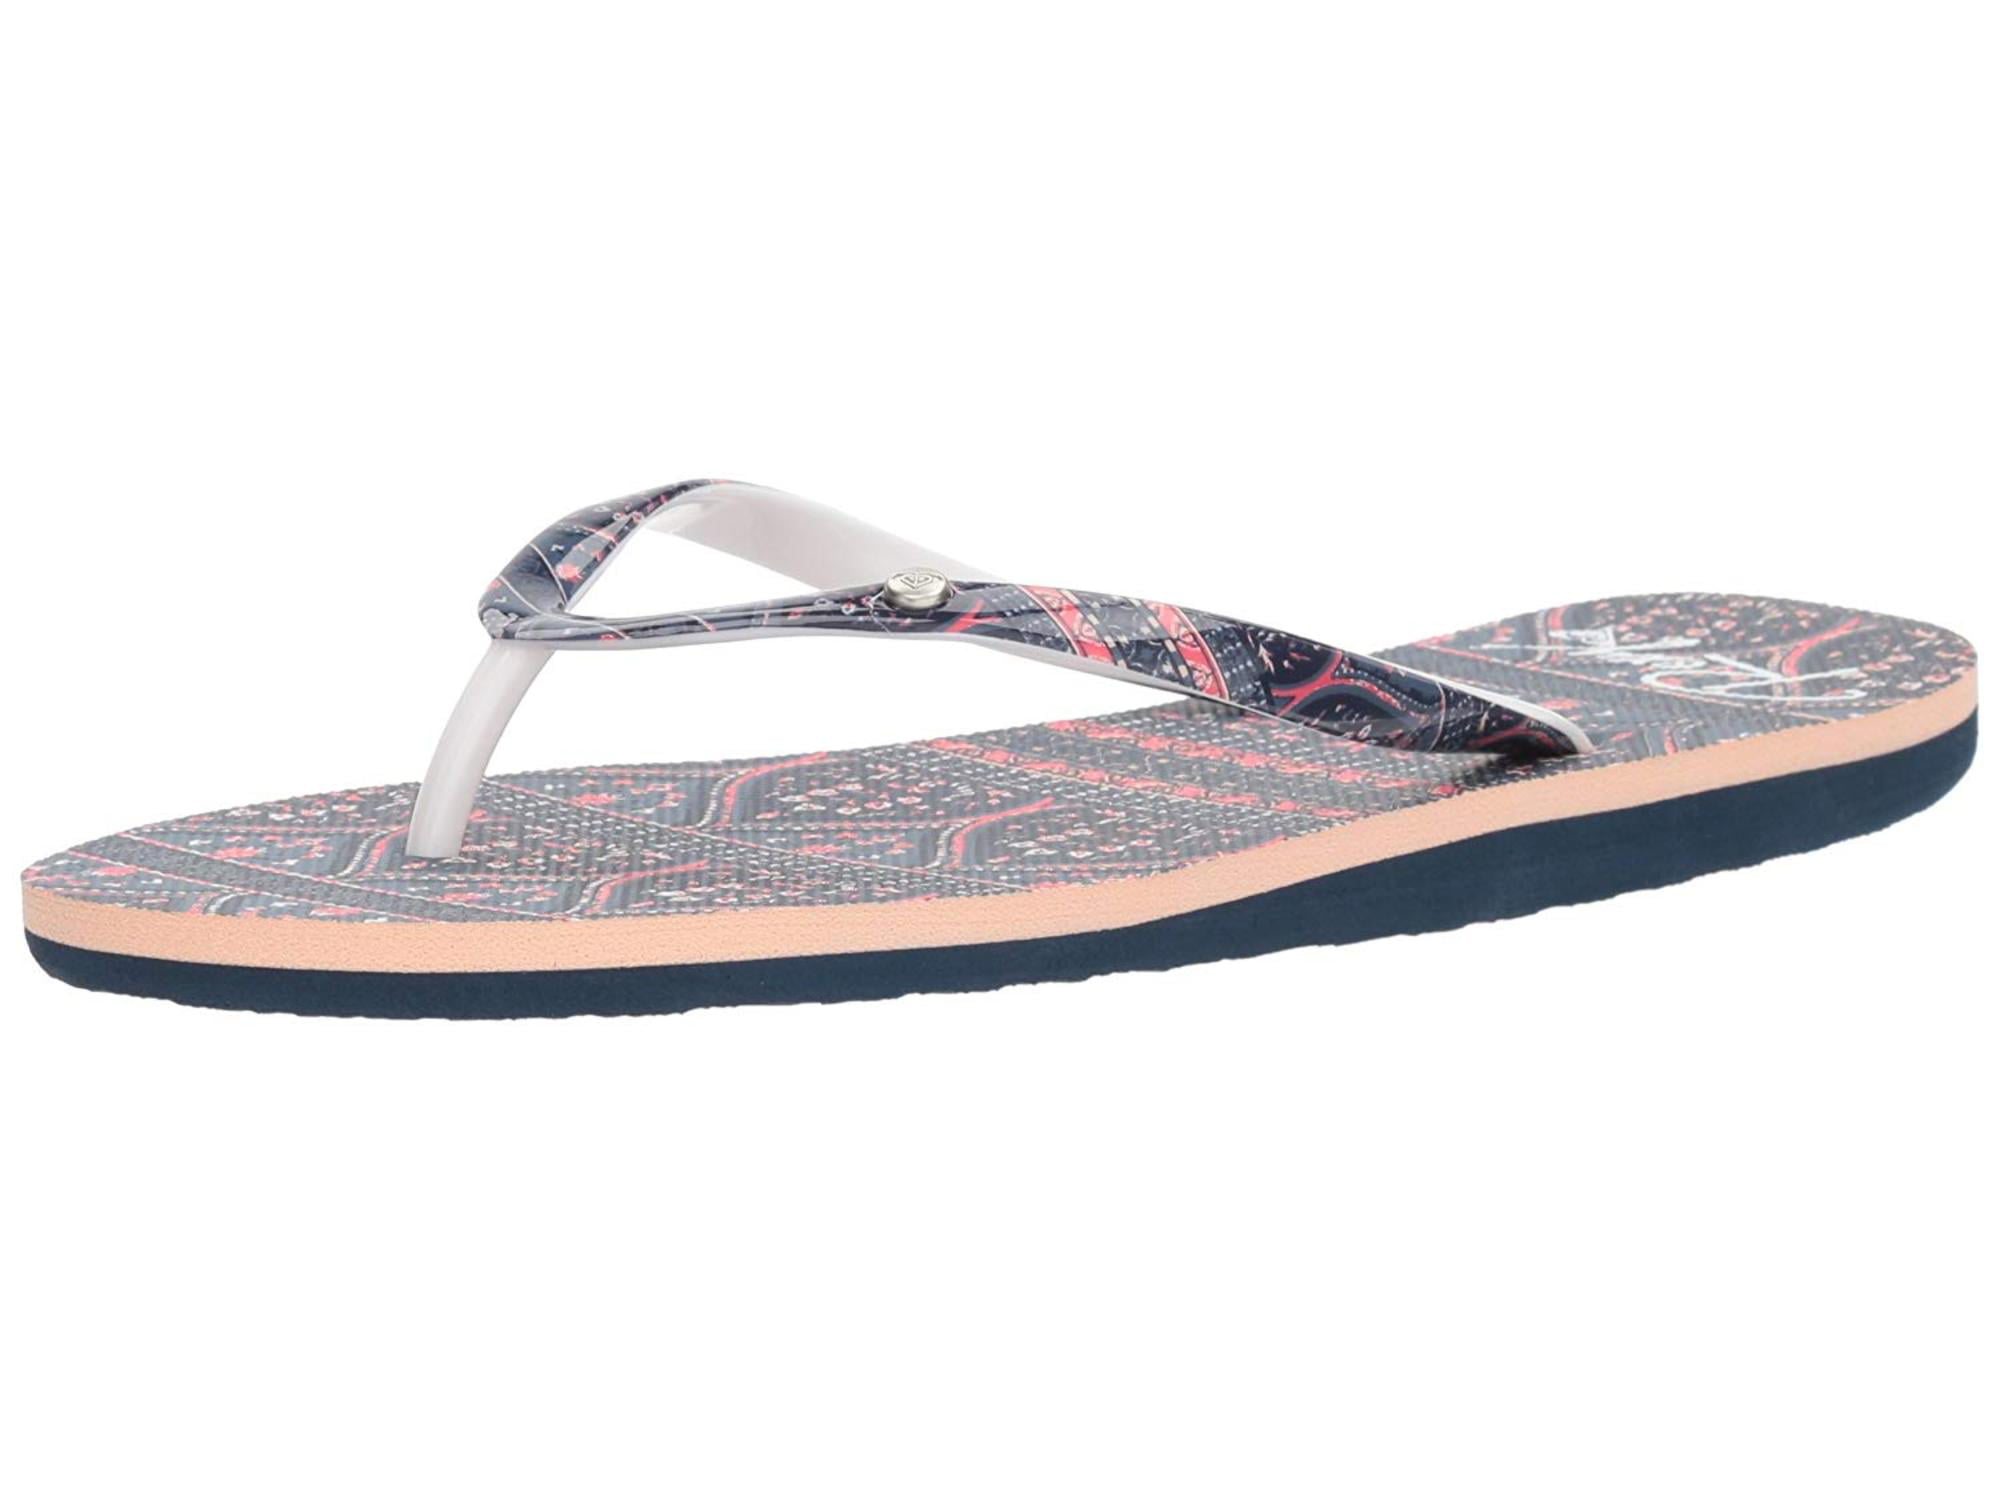 Roxy Women's Portofino Flip Flop Sandals - Walmart.com